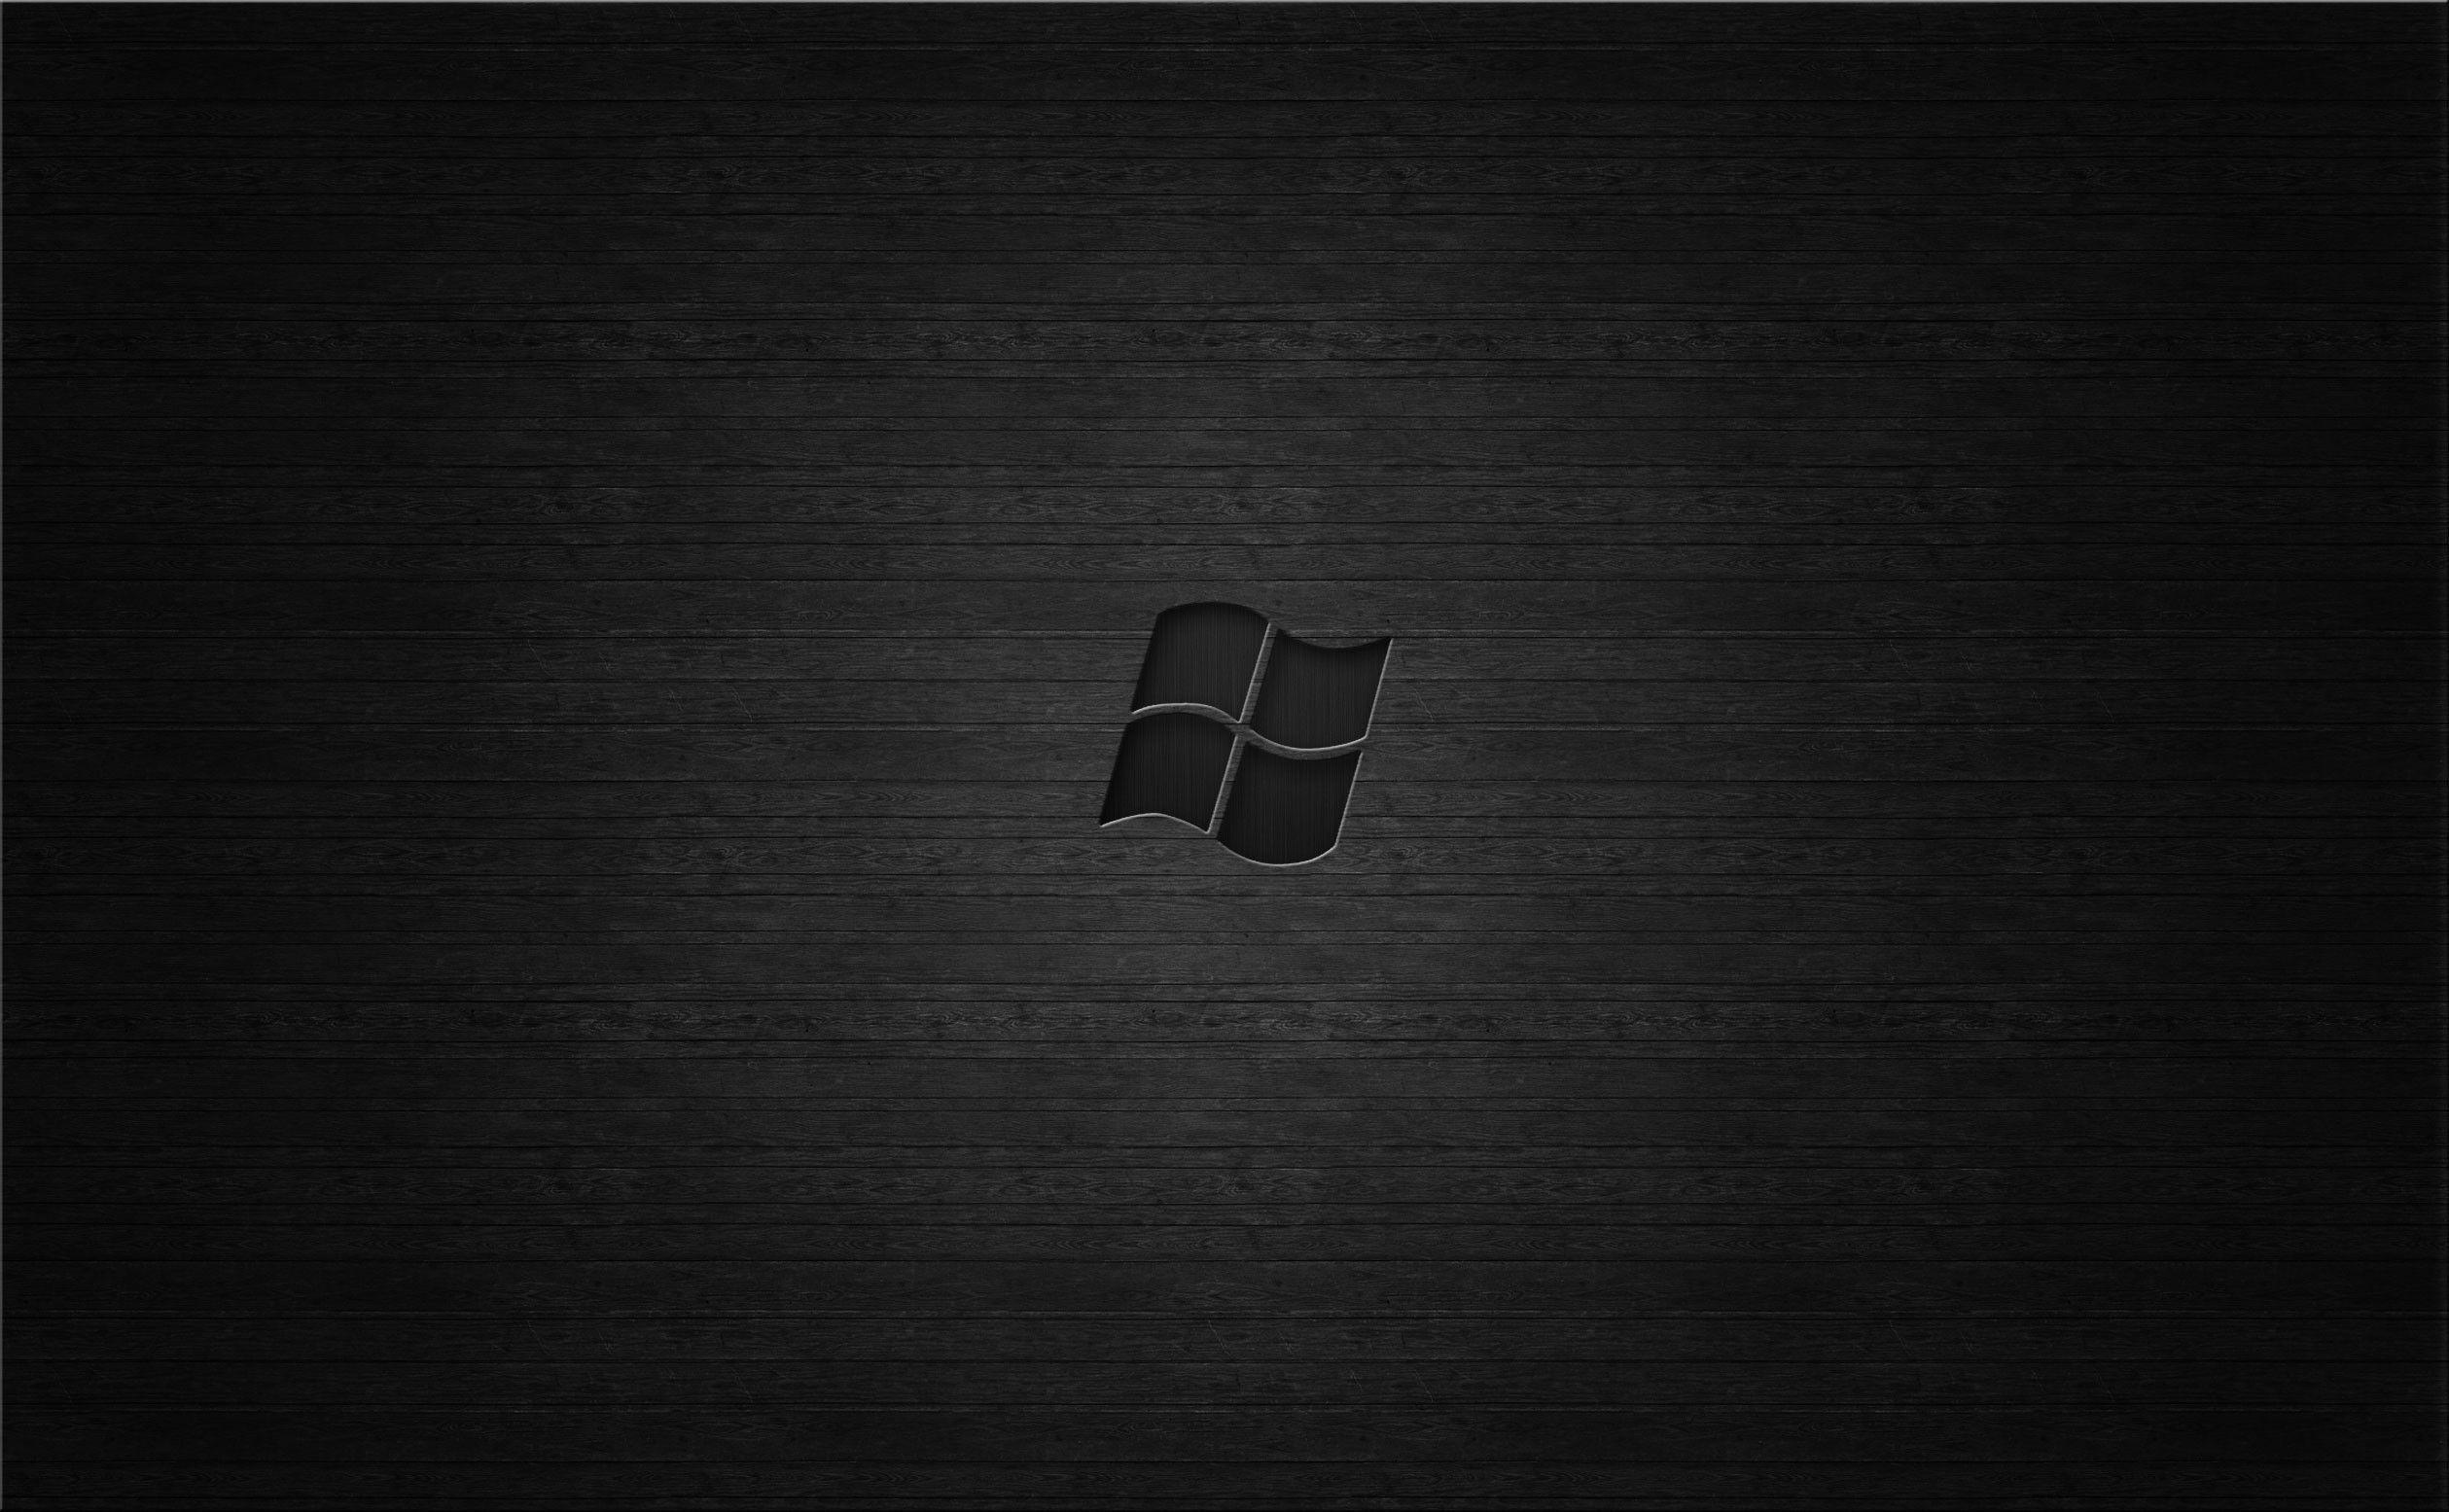 Dark Windows 7 Wallpapers